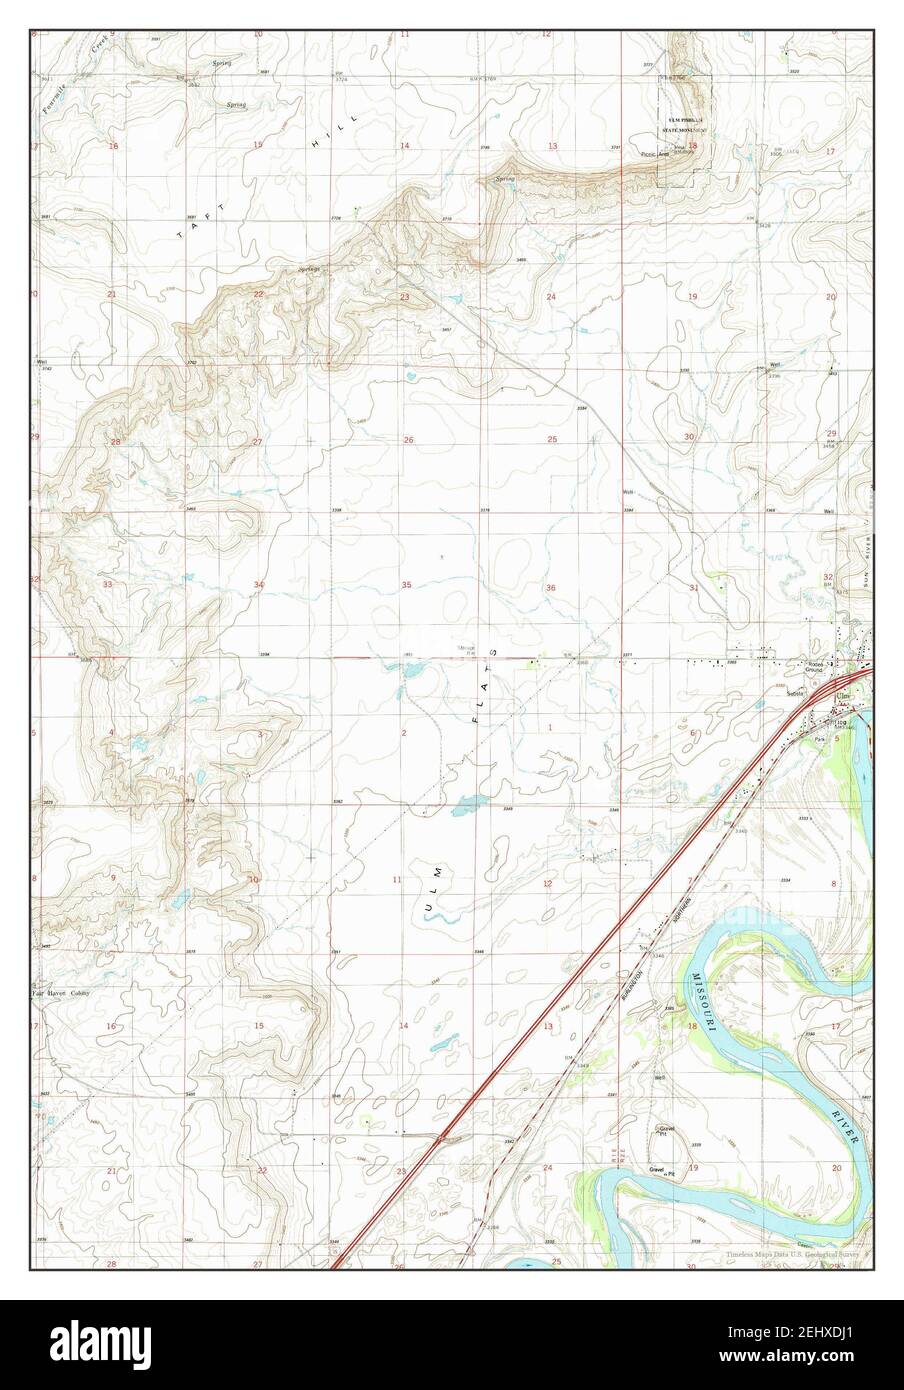 Ulm, Montana, map 1983, 1:24000, United States of America by Timeless Maps, data U.S. Geological Survey Stock Photo